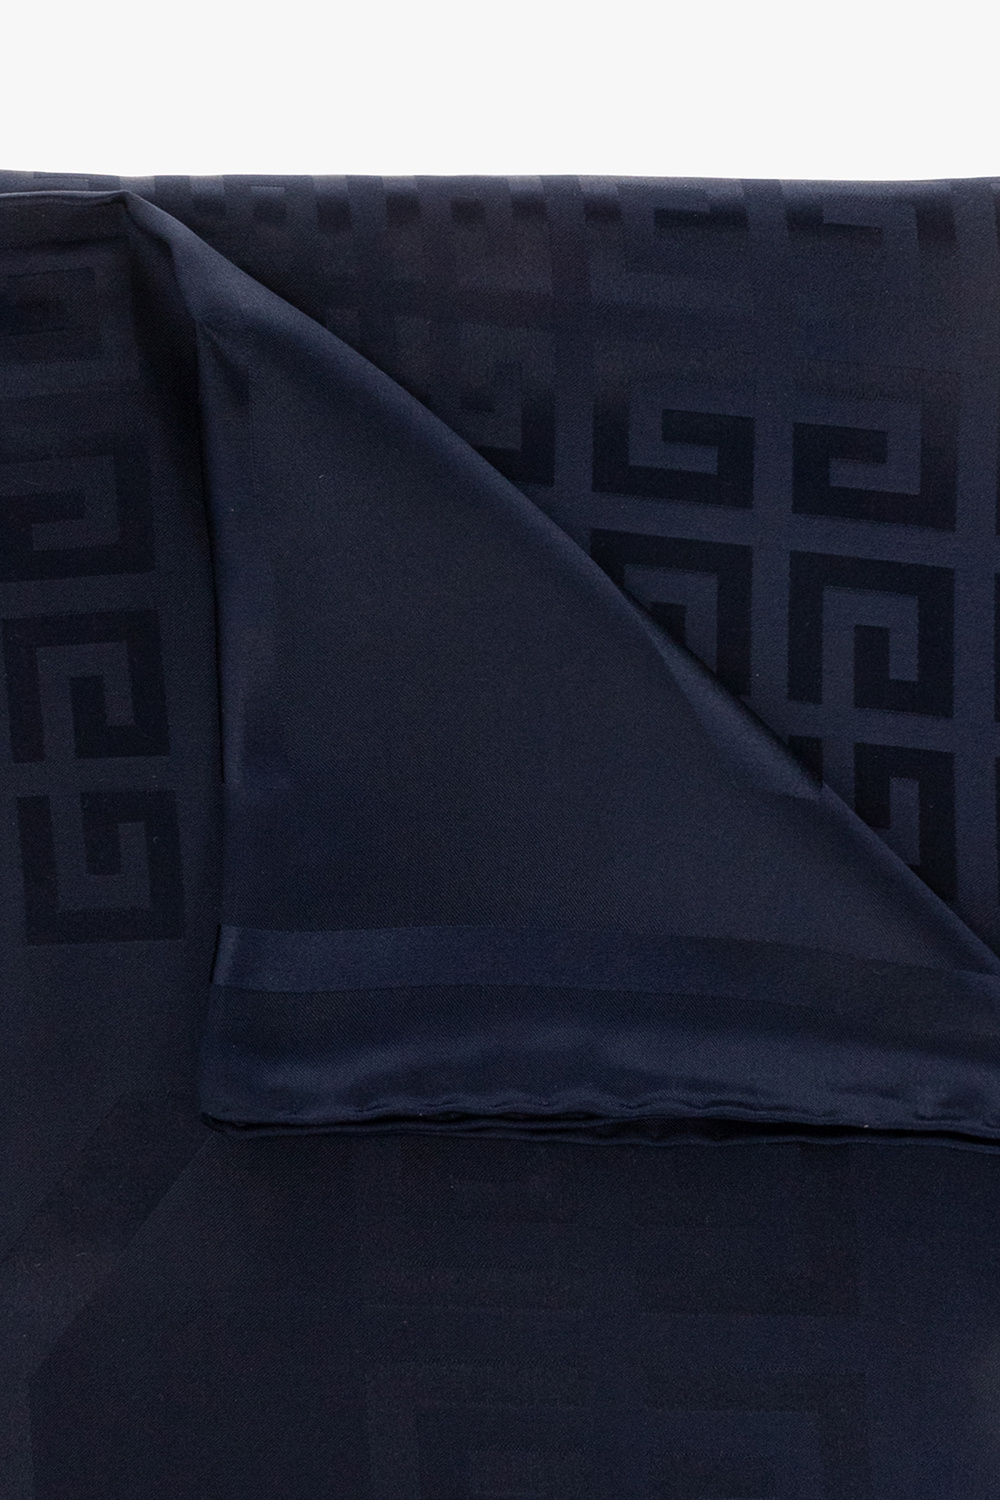 Givenchy givenchy x browns 50 antigona leather tote bag item